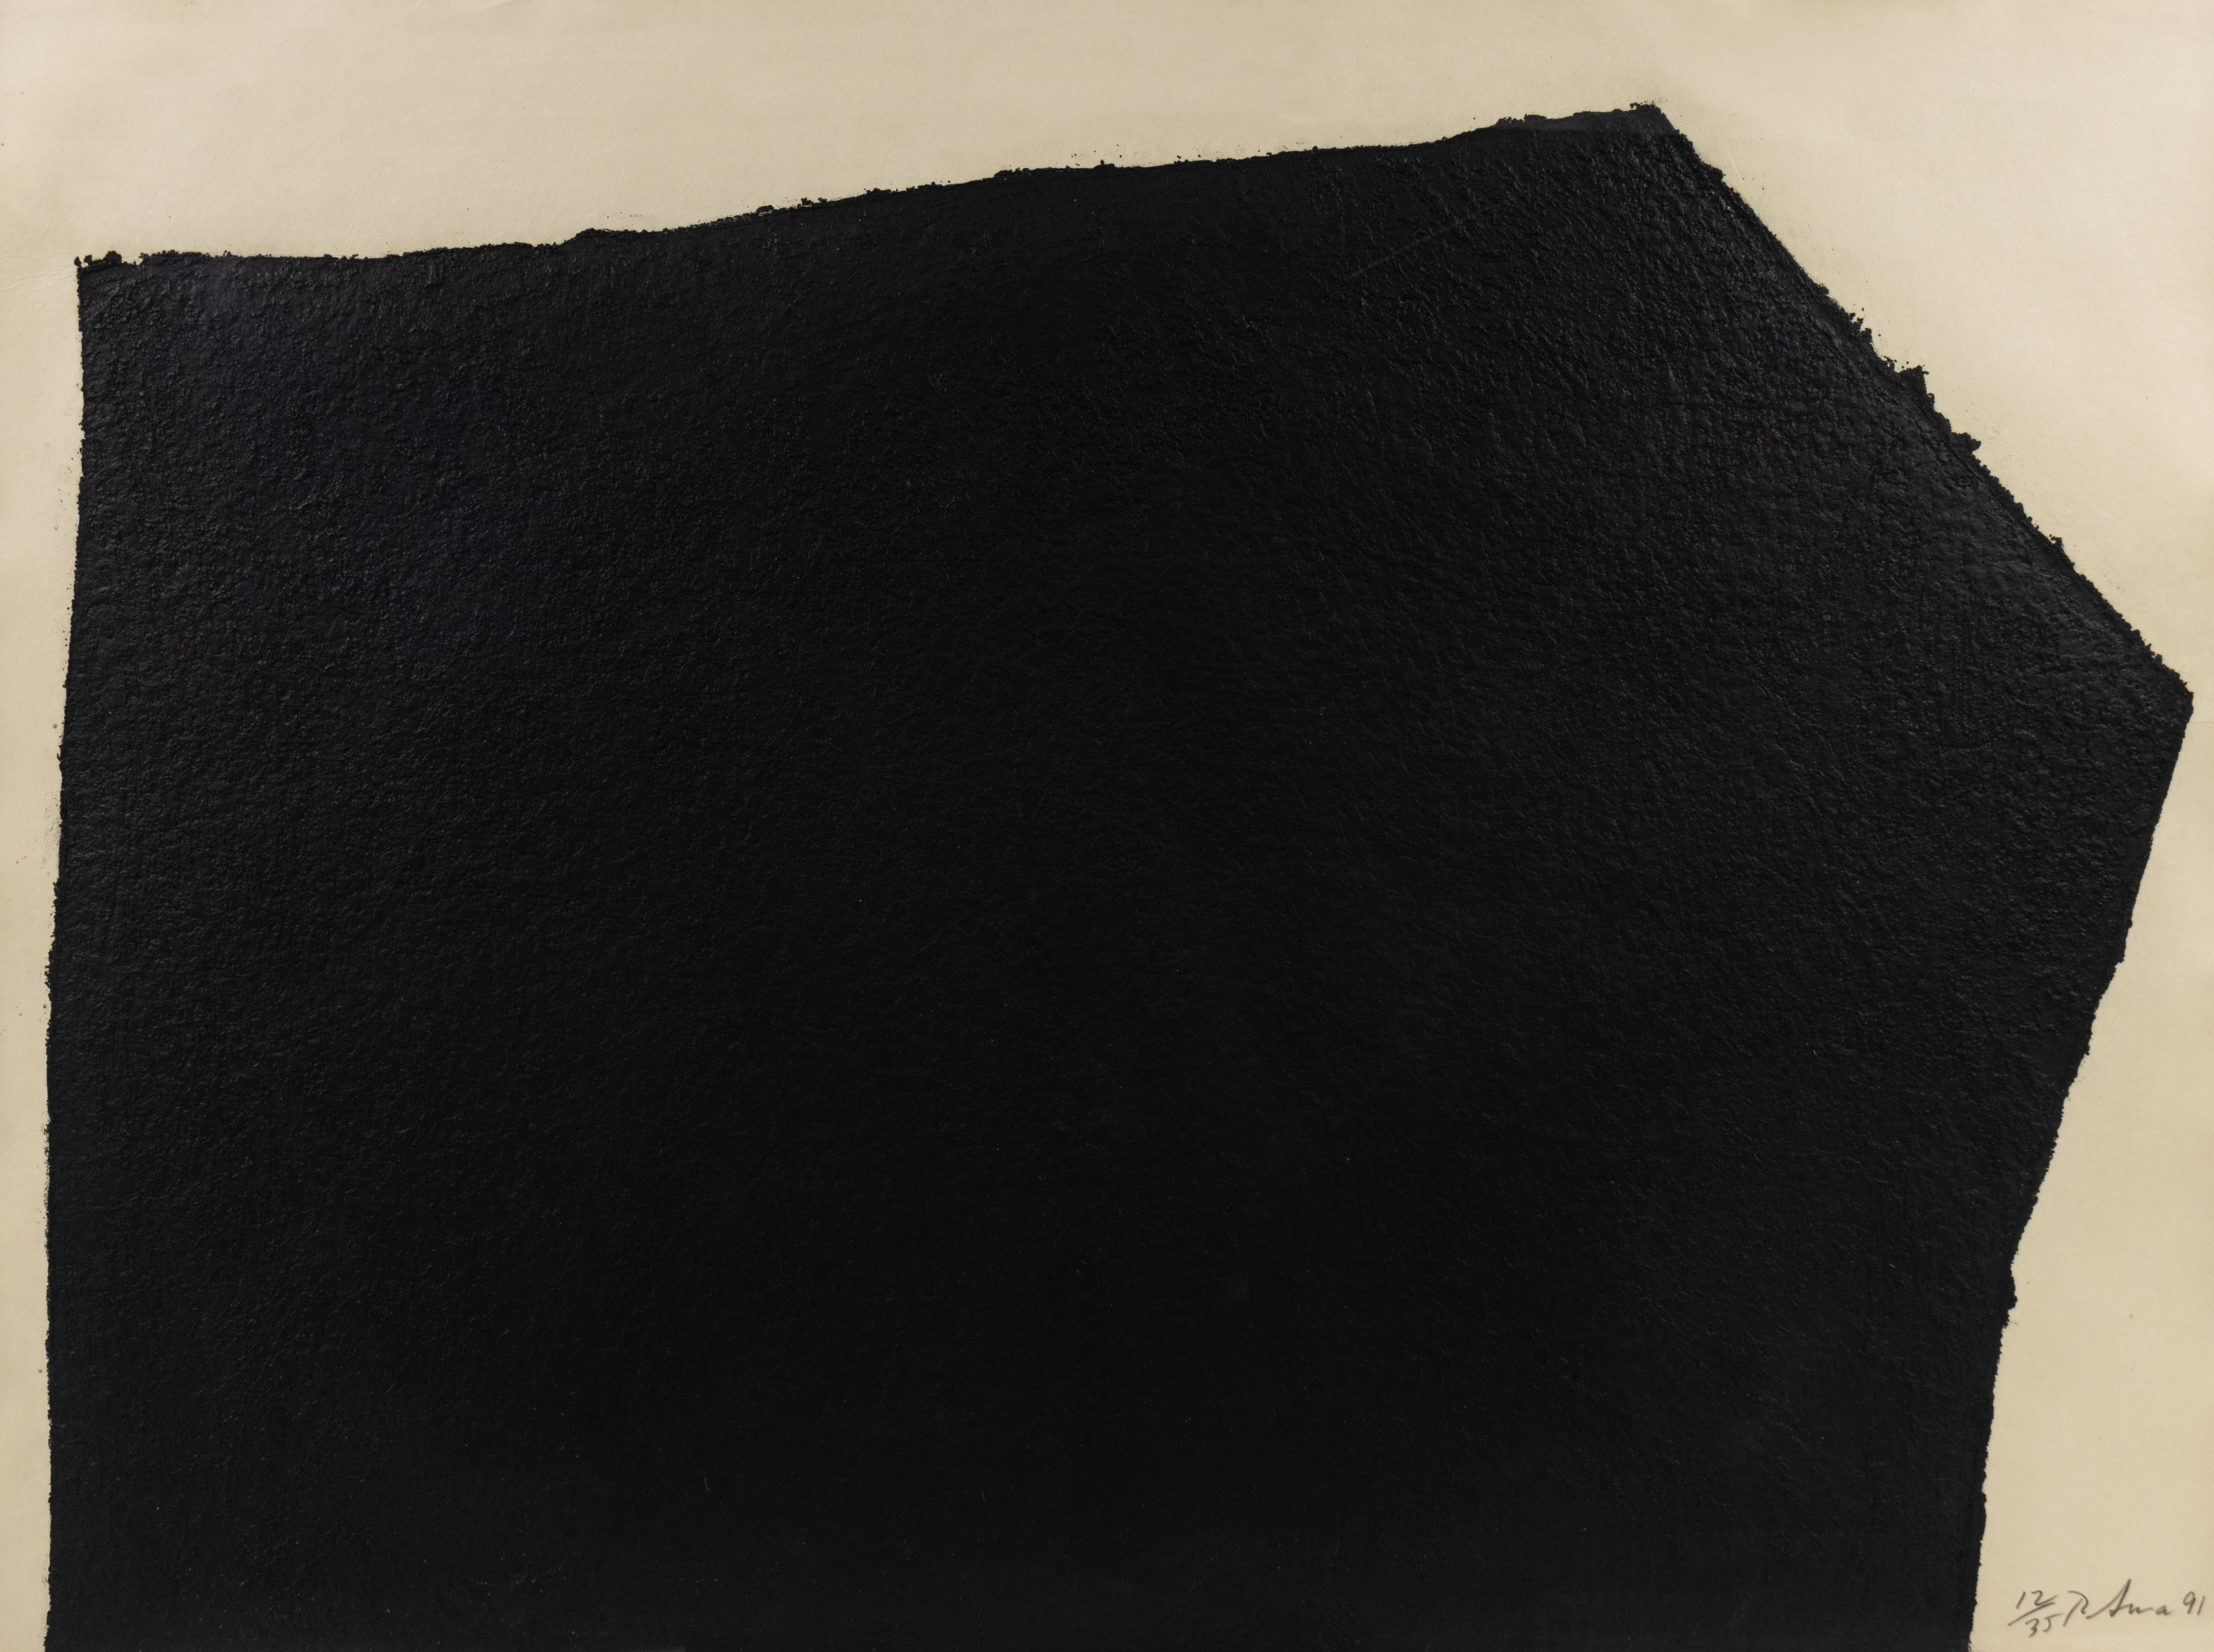 Hreppholar VII (Berswordt/Wallrabe 80; G. 1) - Print by Richard Serra